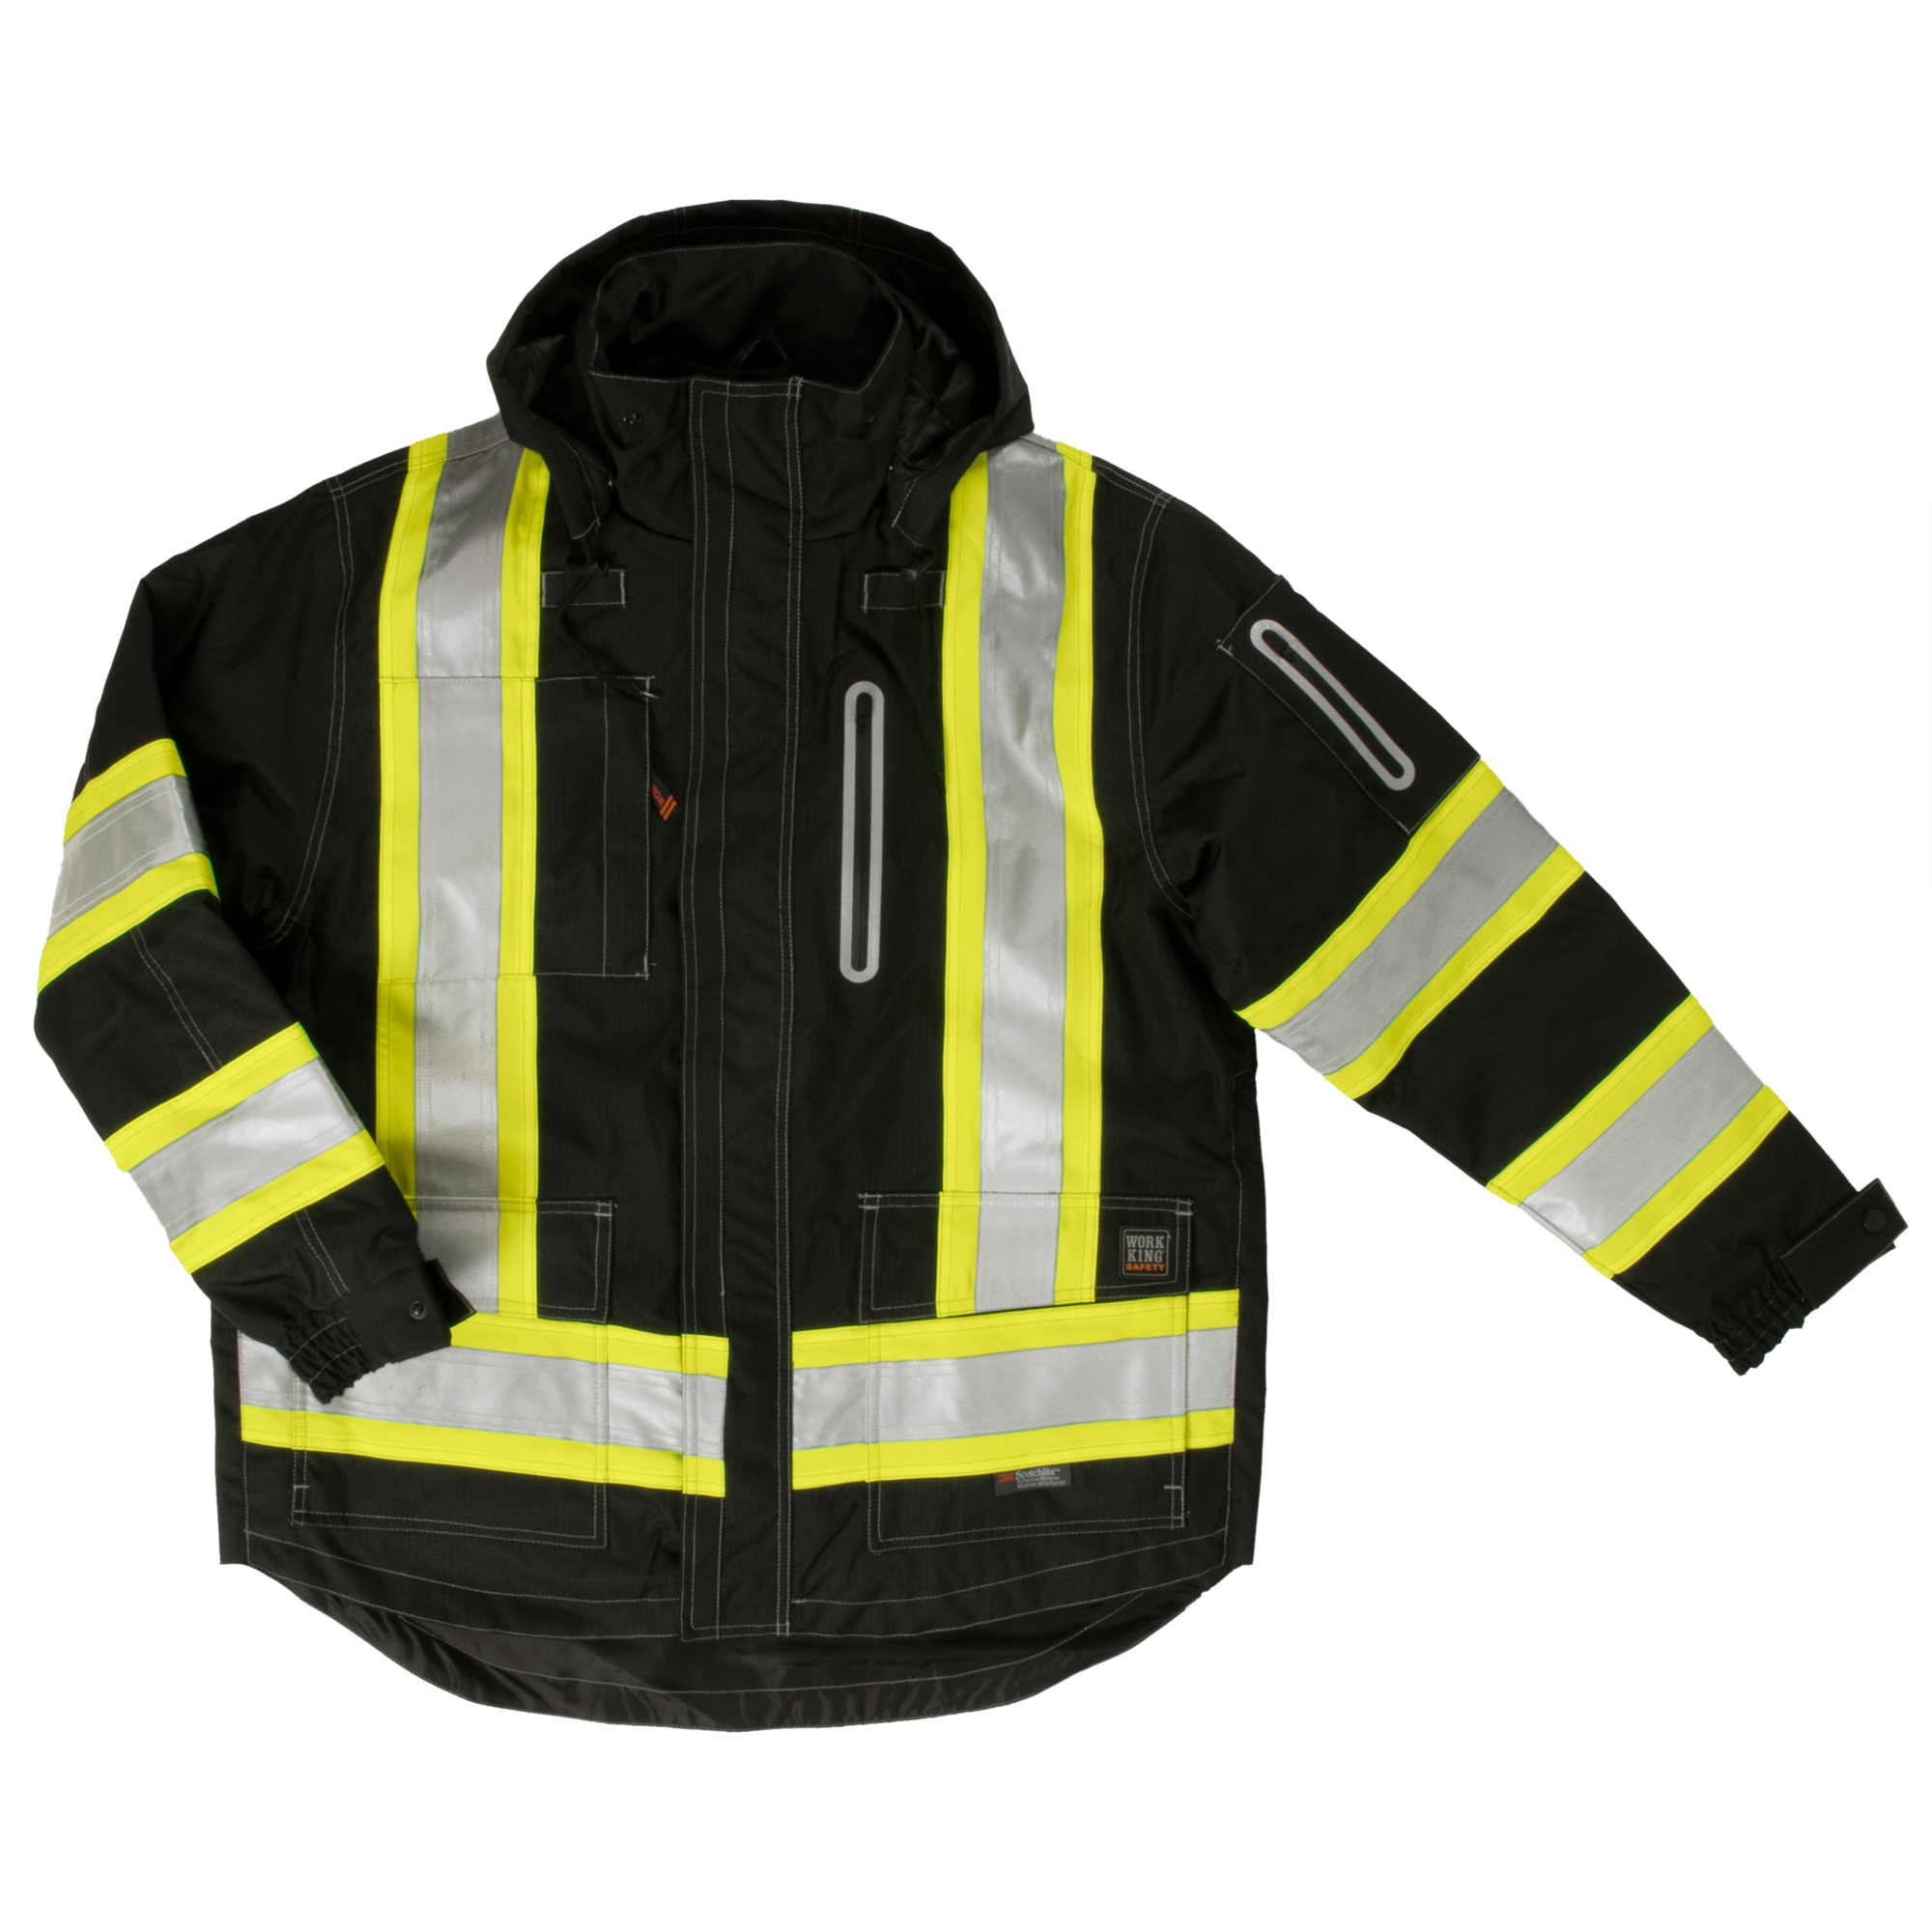 Tough Duck, 4Inch-1 Safety Jacket, Size M, Color BLACK, Model S18711-BLK-M